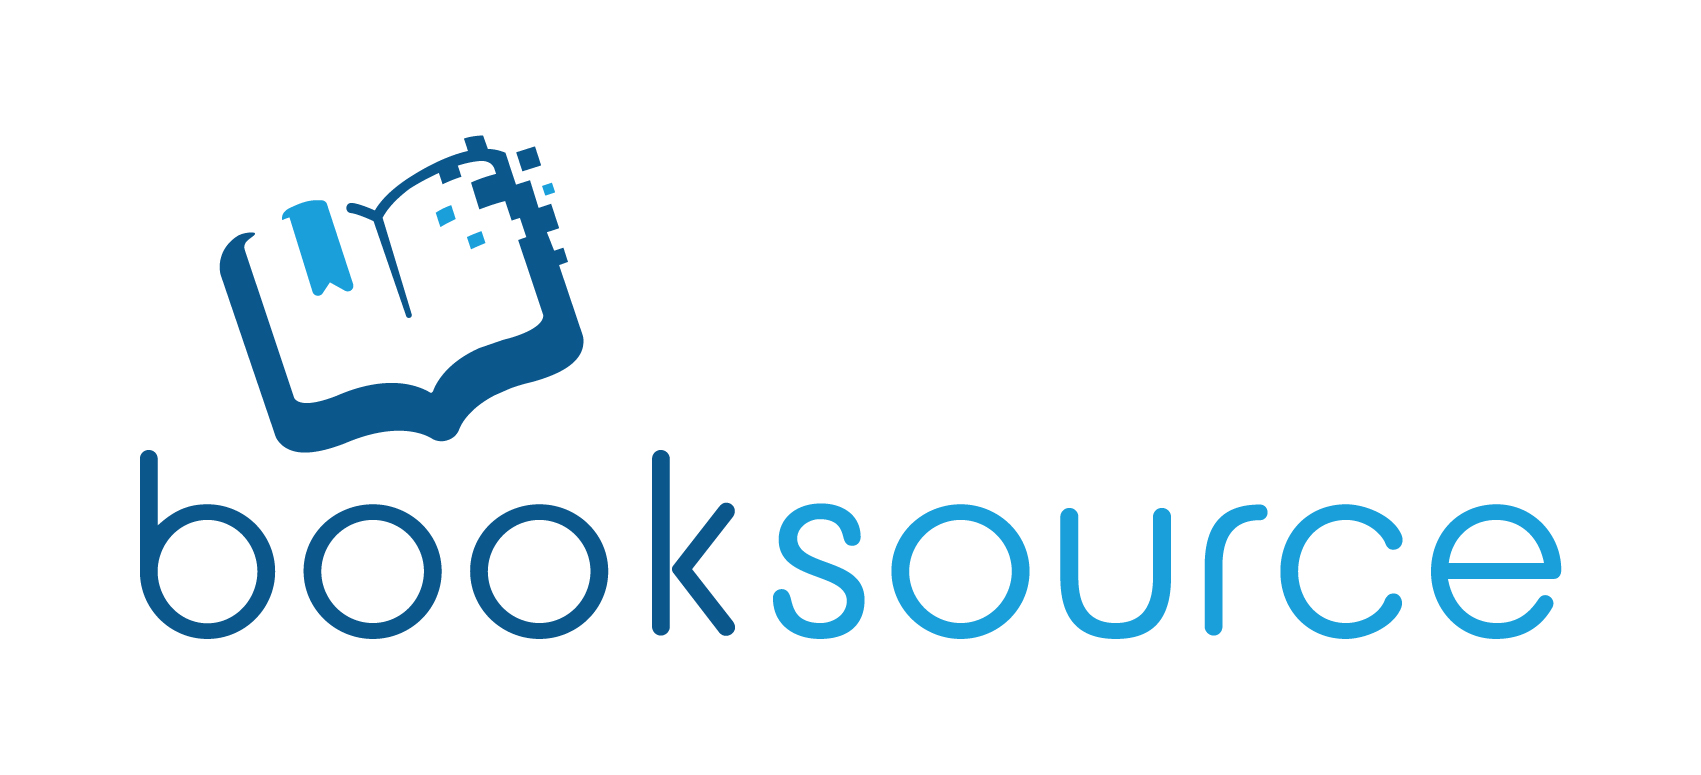 Booksource Company Logo